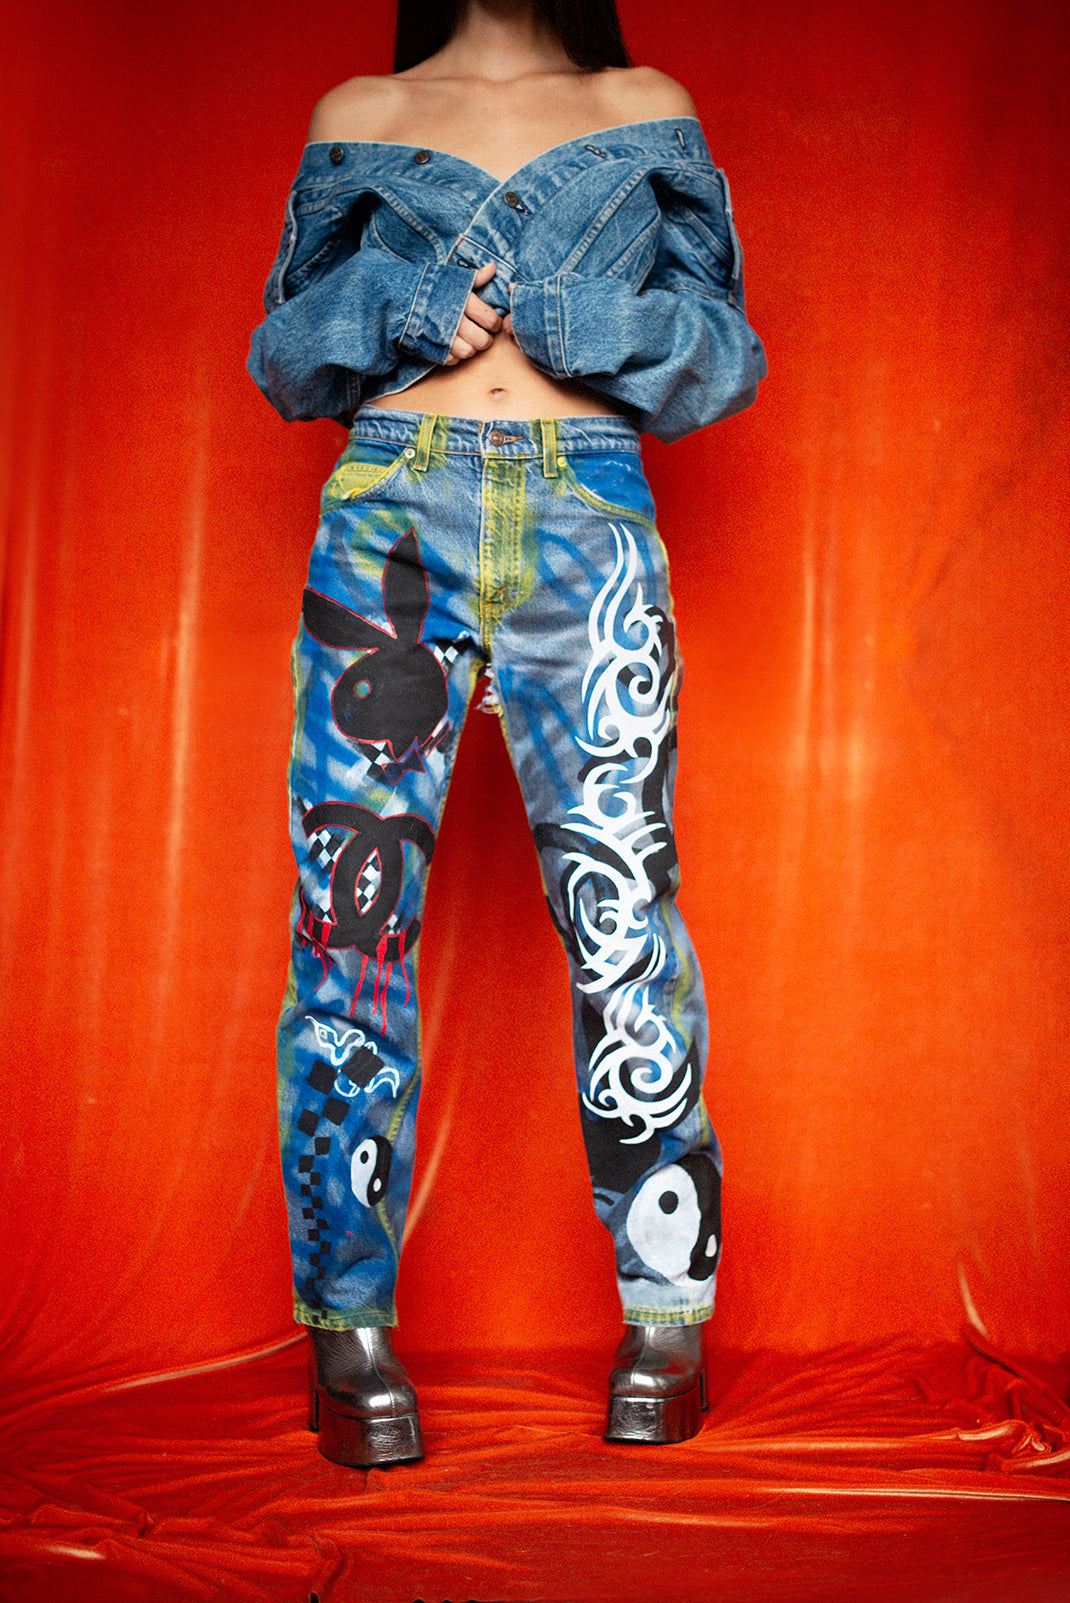 Denim pants hand crafted by Barbara Baughman